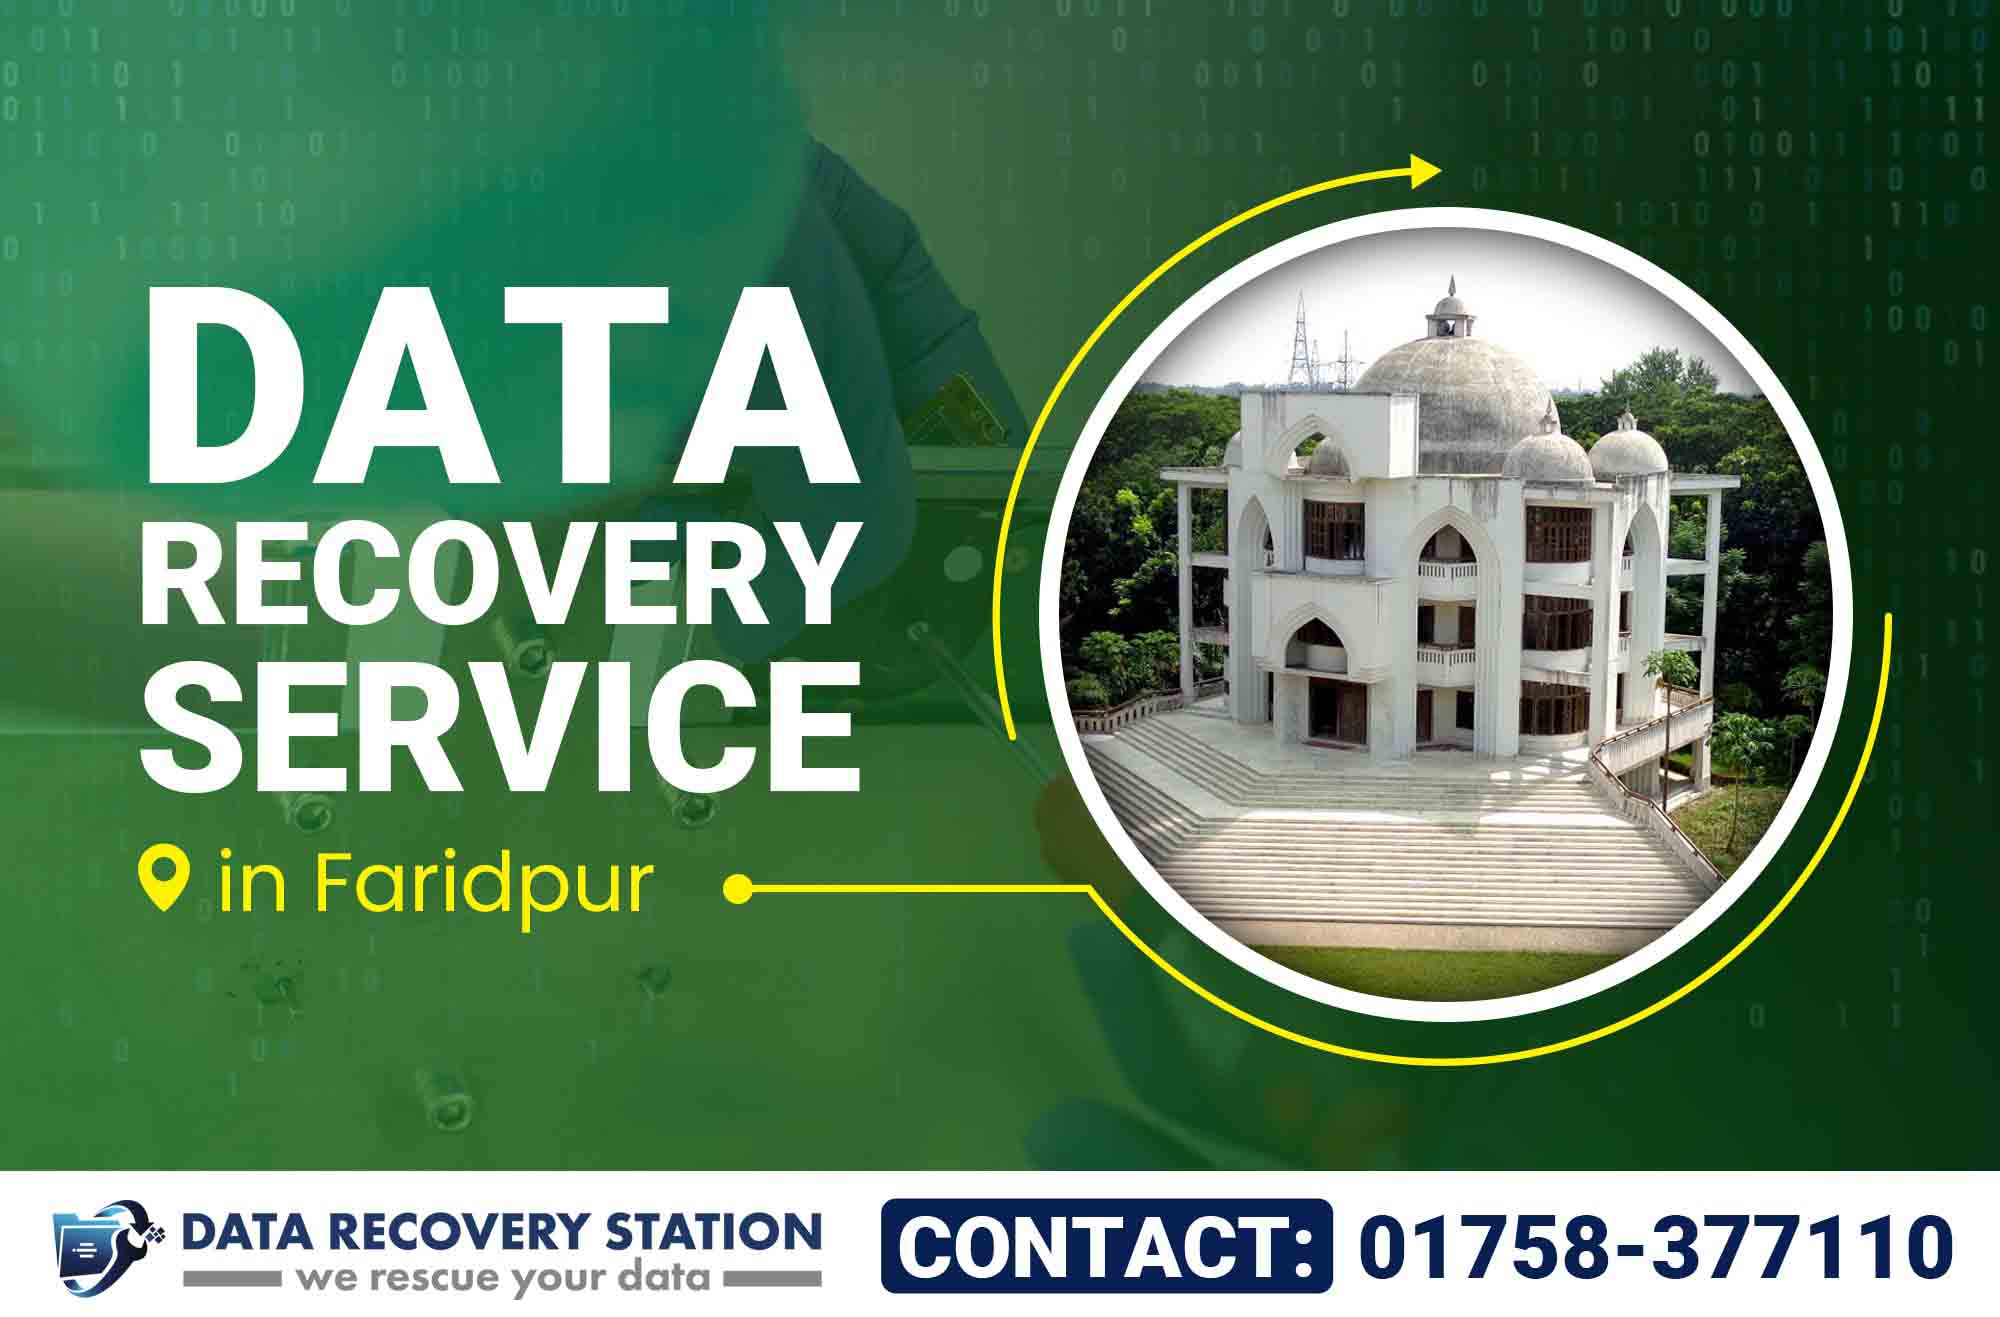 Data Recovery Service in Faridpur